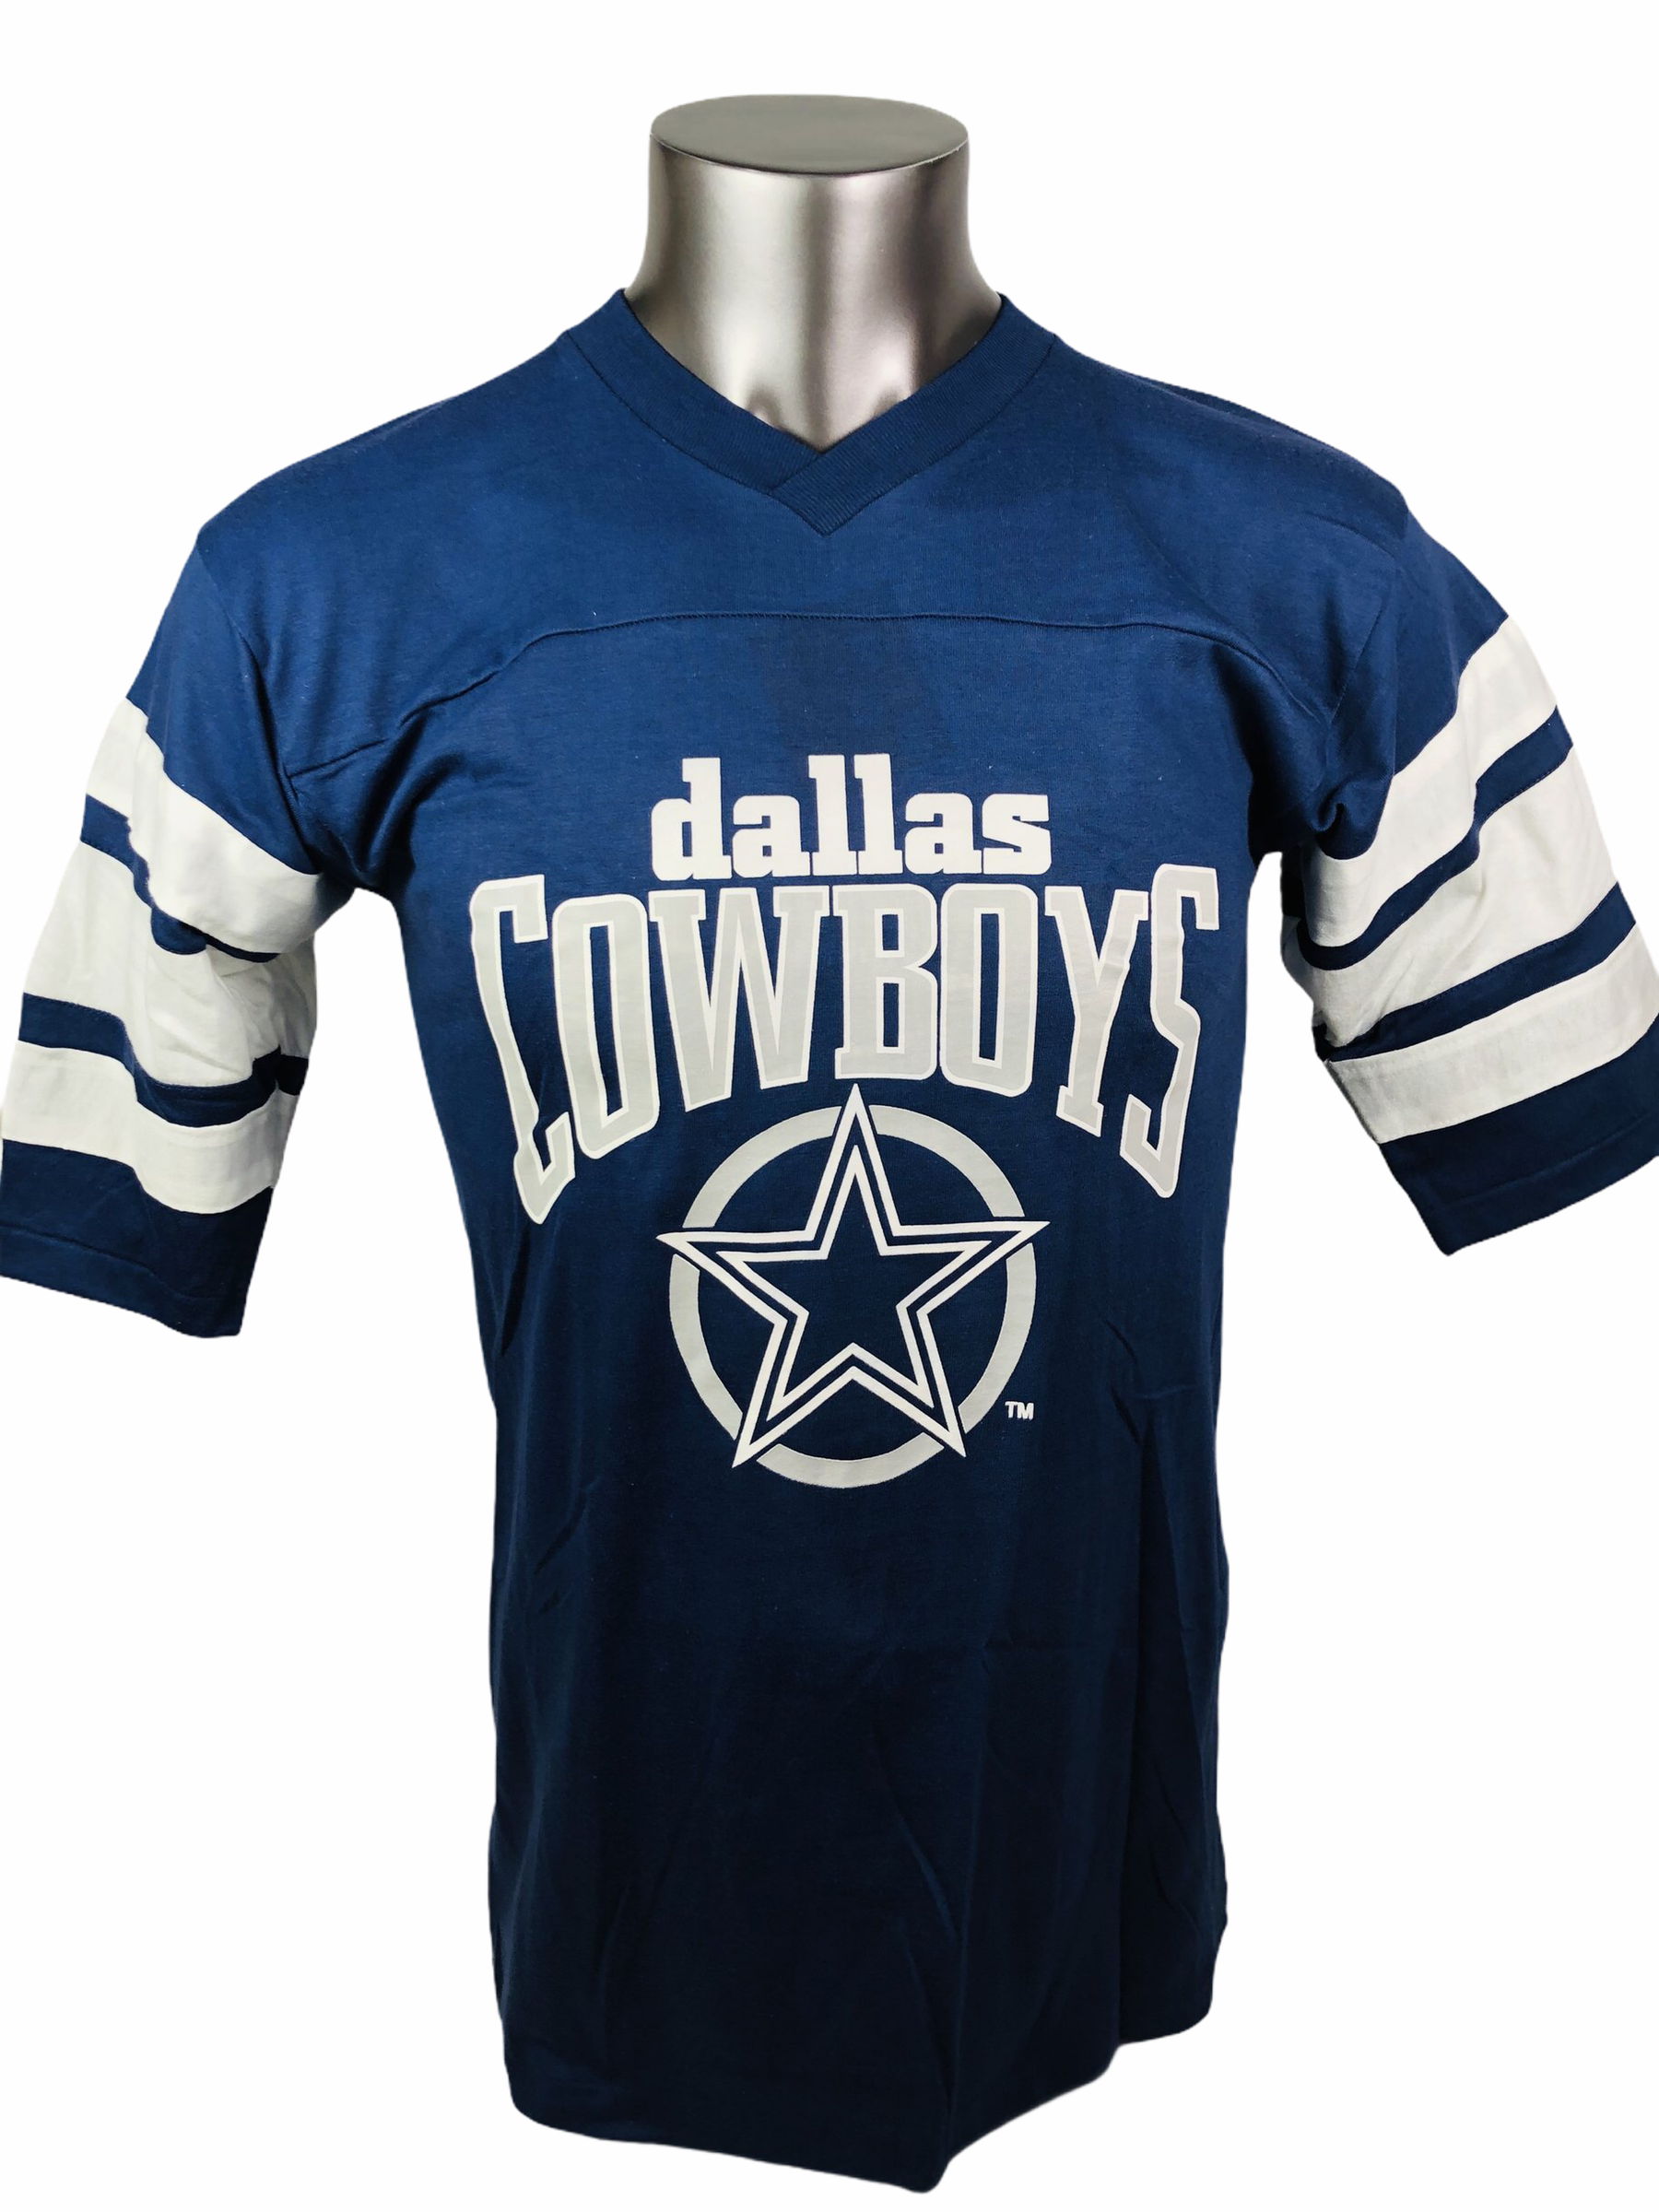 Vintage Dallas Cowboys T-Shirt